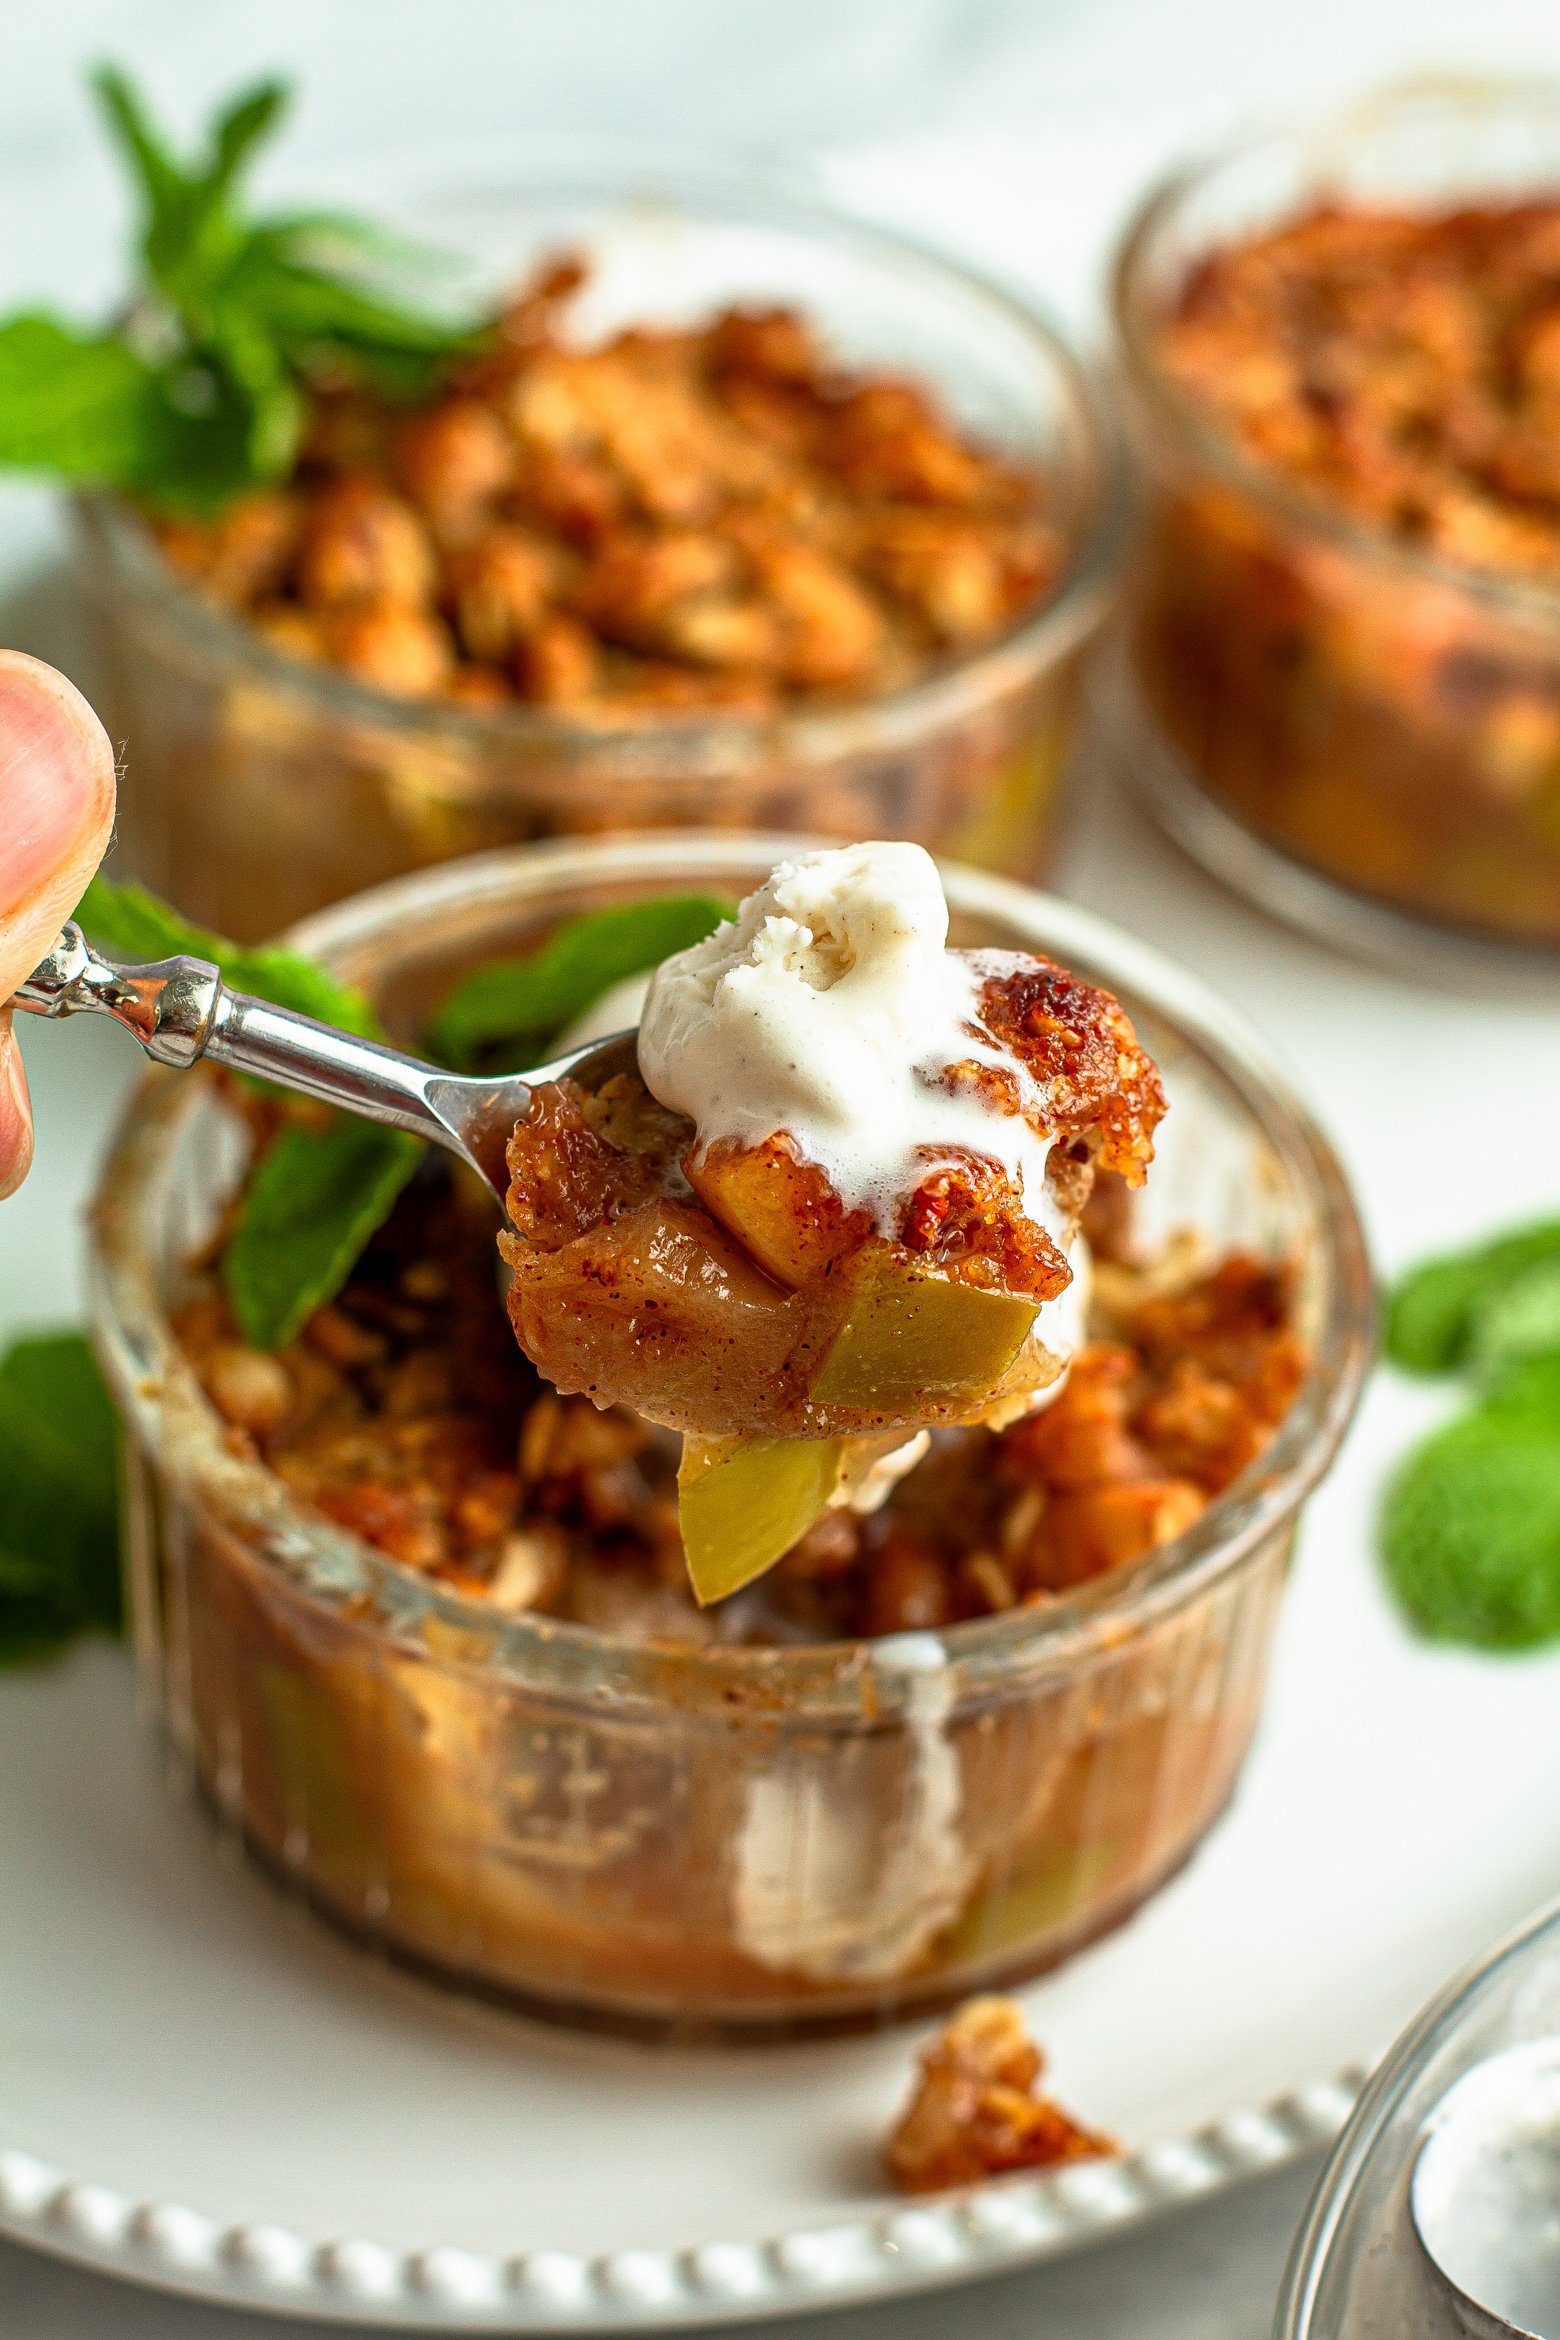 Apple Honey Pecan Turkey Wrap Recipe - Meal Planning Magic